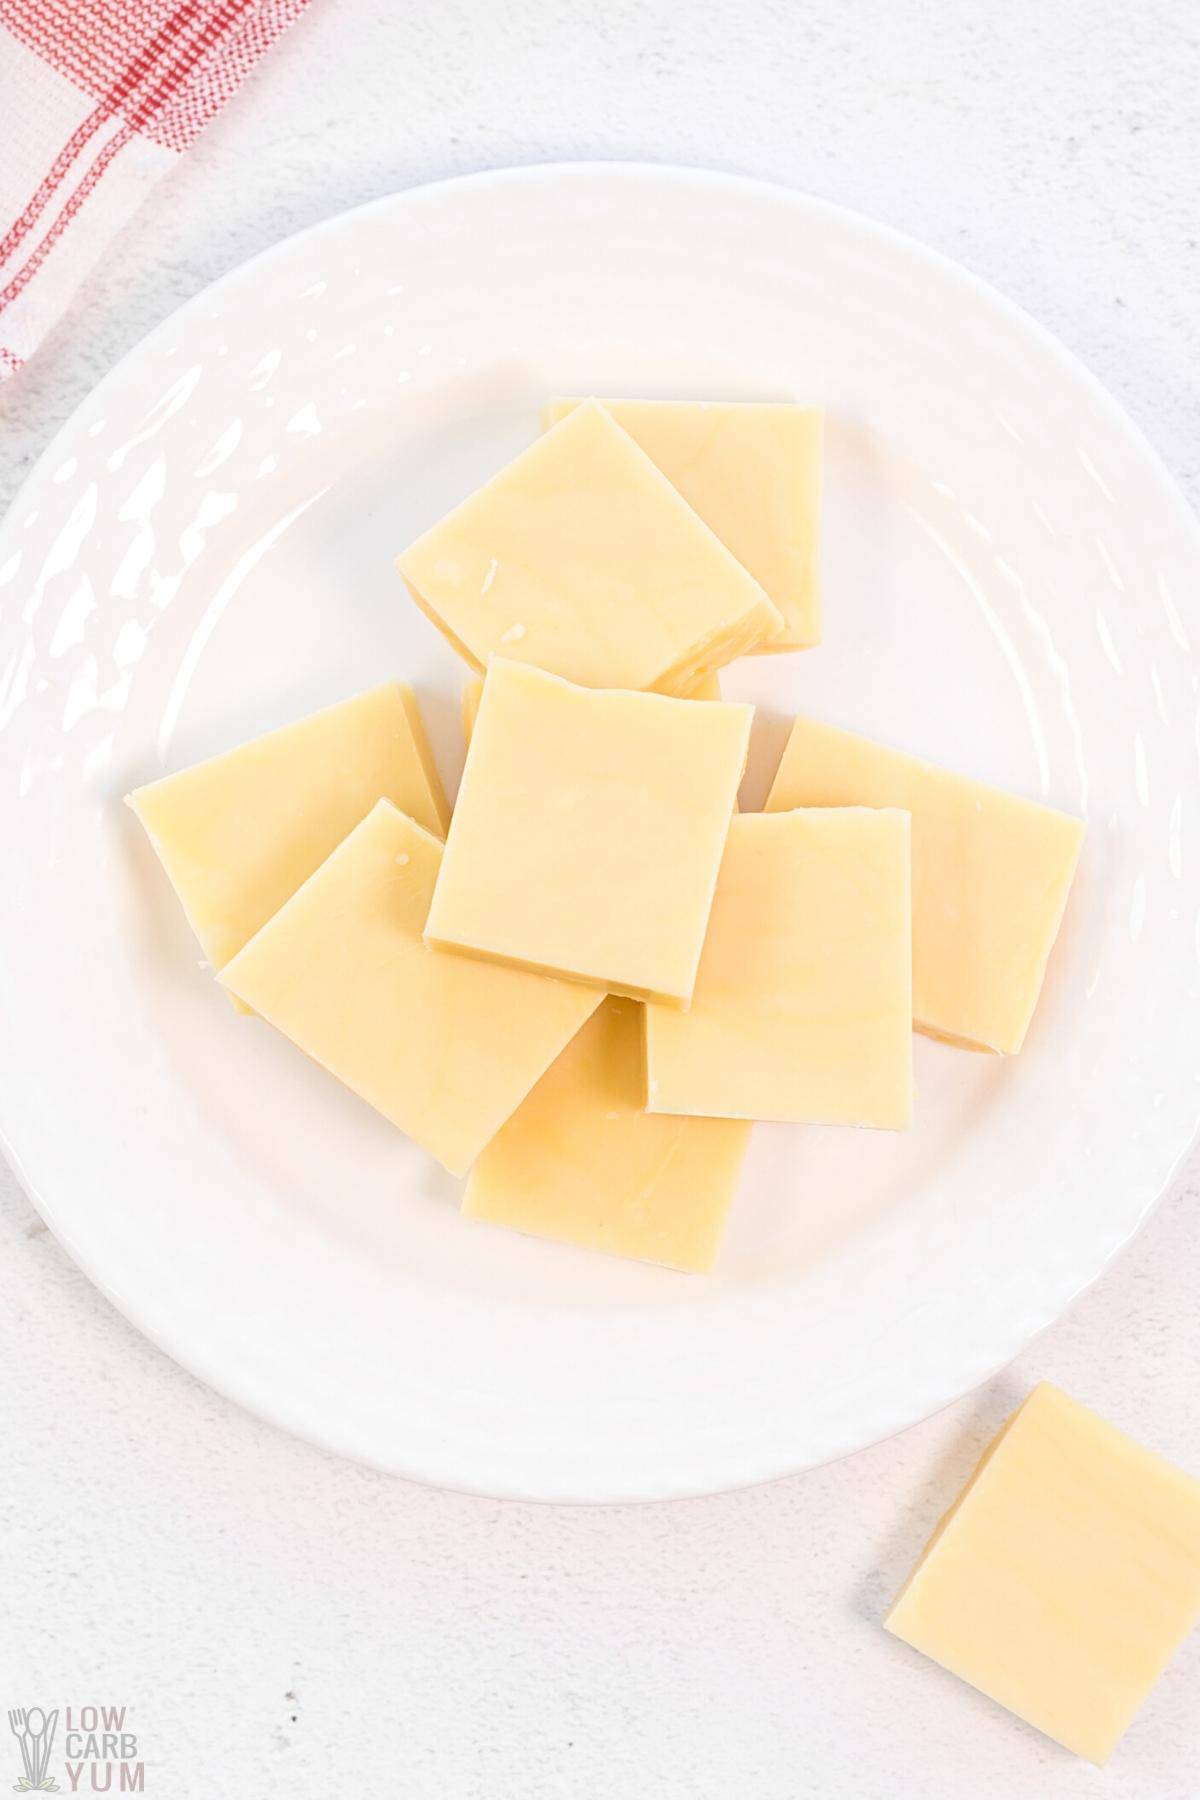 keto friendly fudge squares on white plate overhead shot.